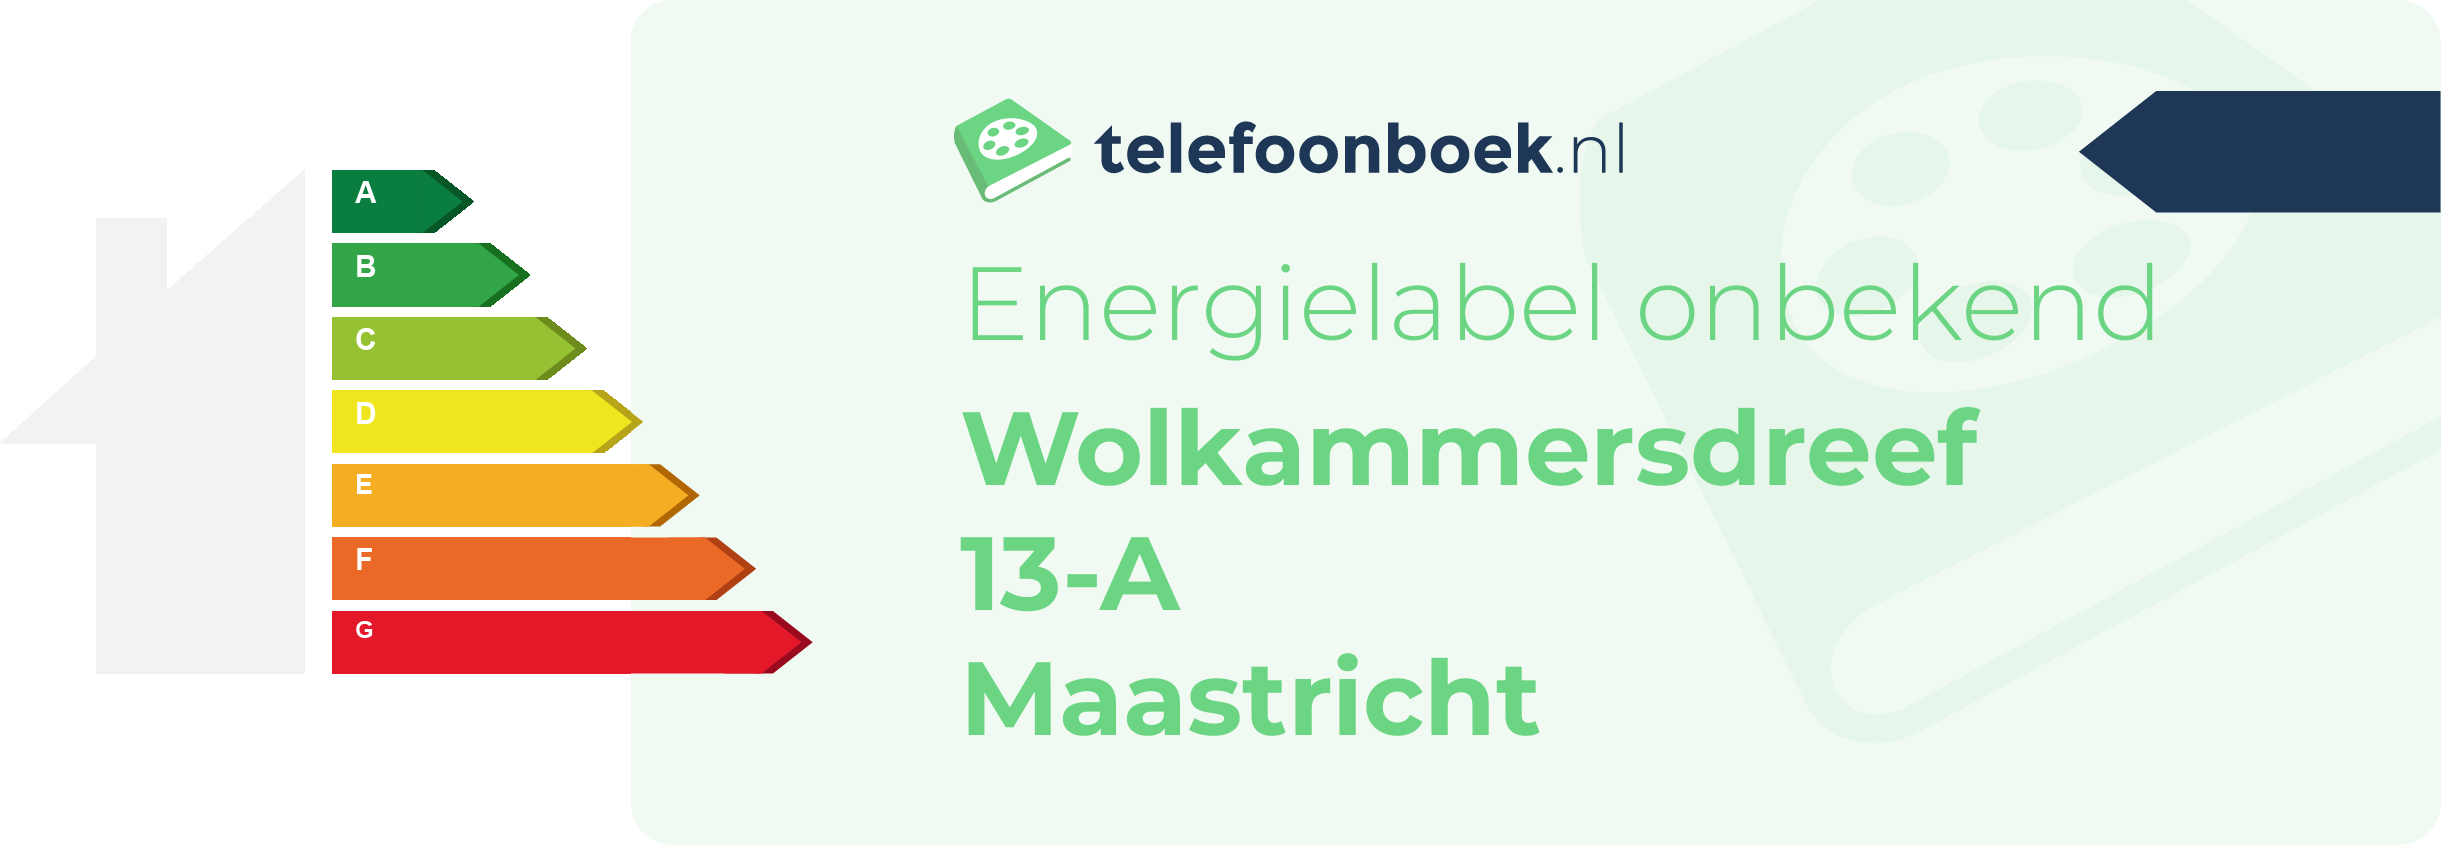 Energielabel Wolkammersdreef 13-A Maastricht